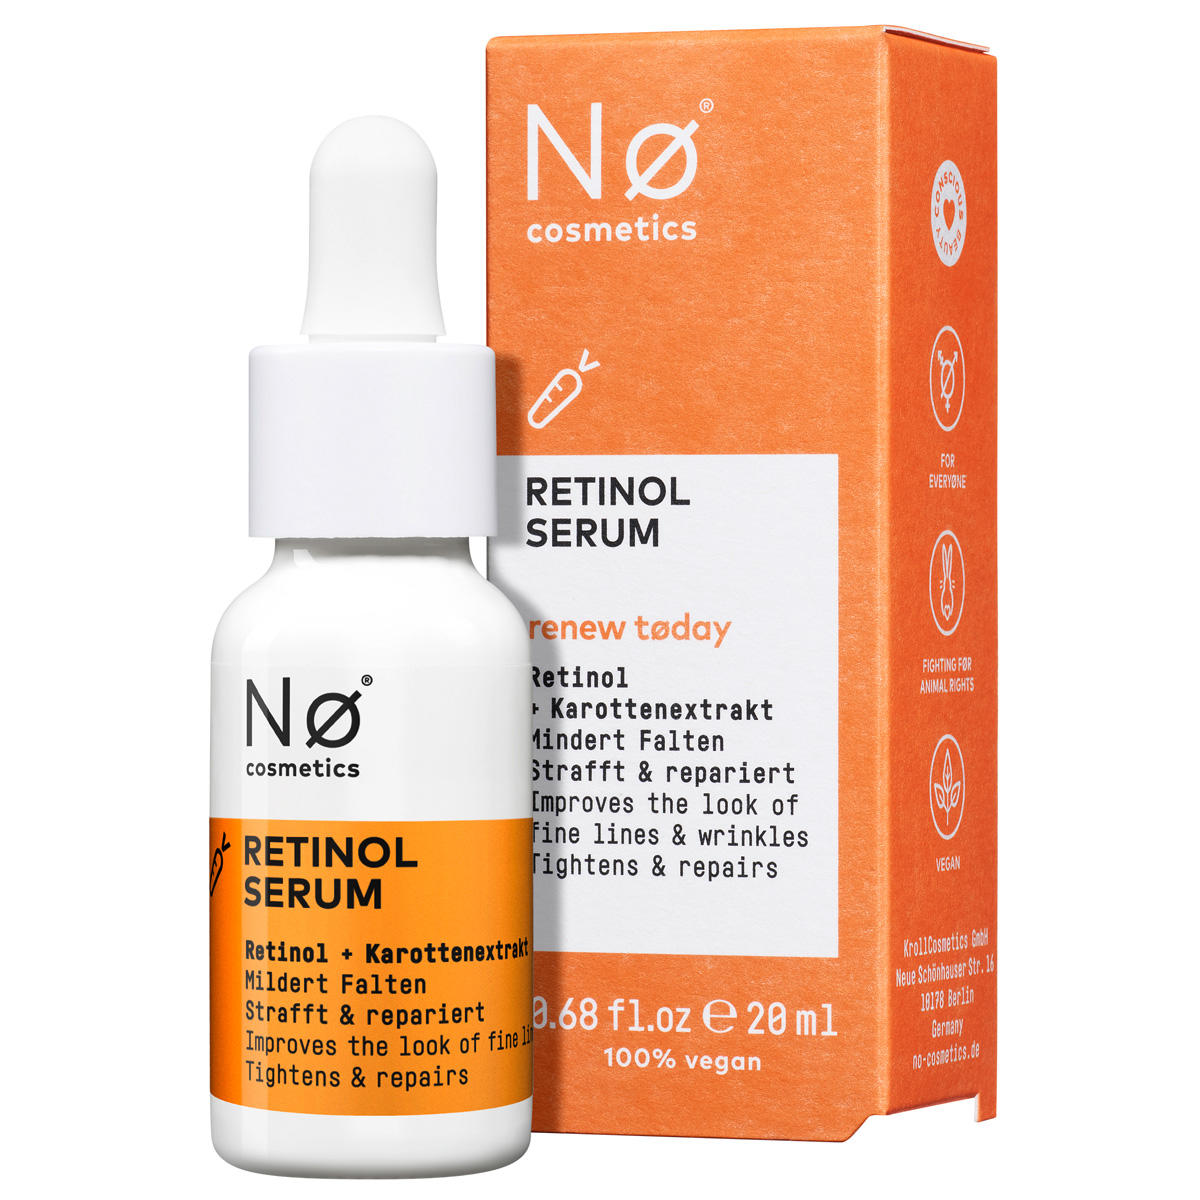 Nø Cosmetics renew tøday Retinol Serum 20 ml - 1